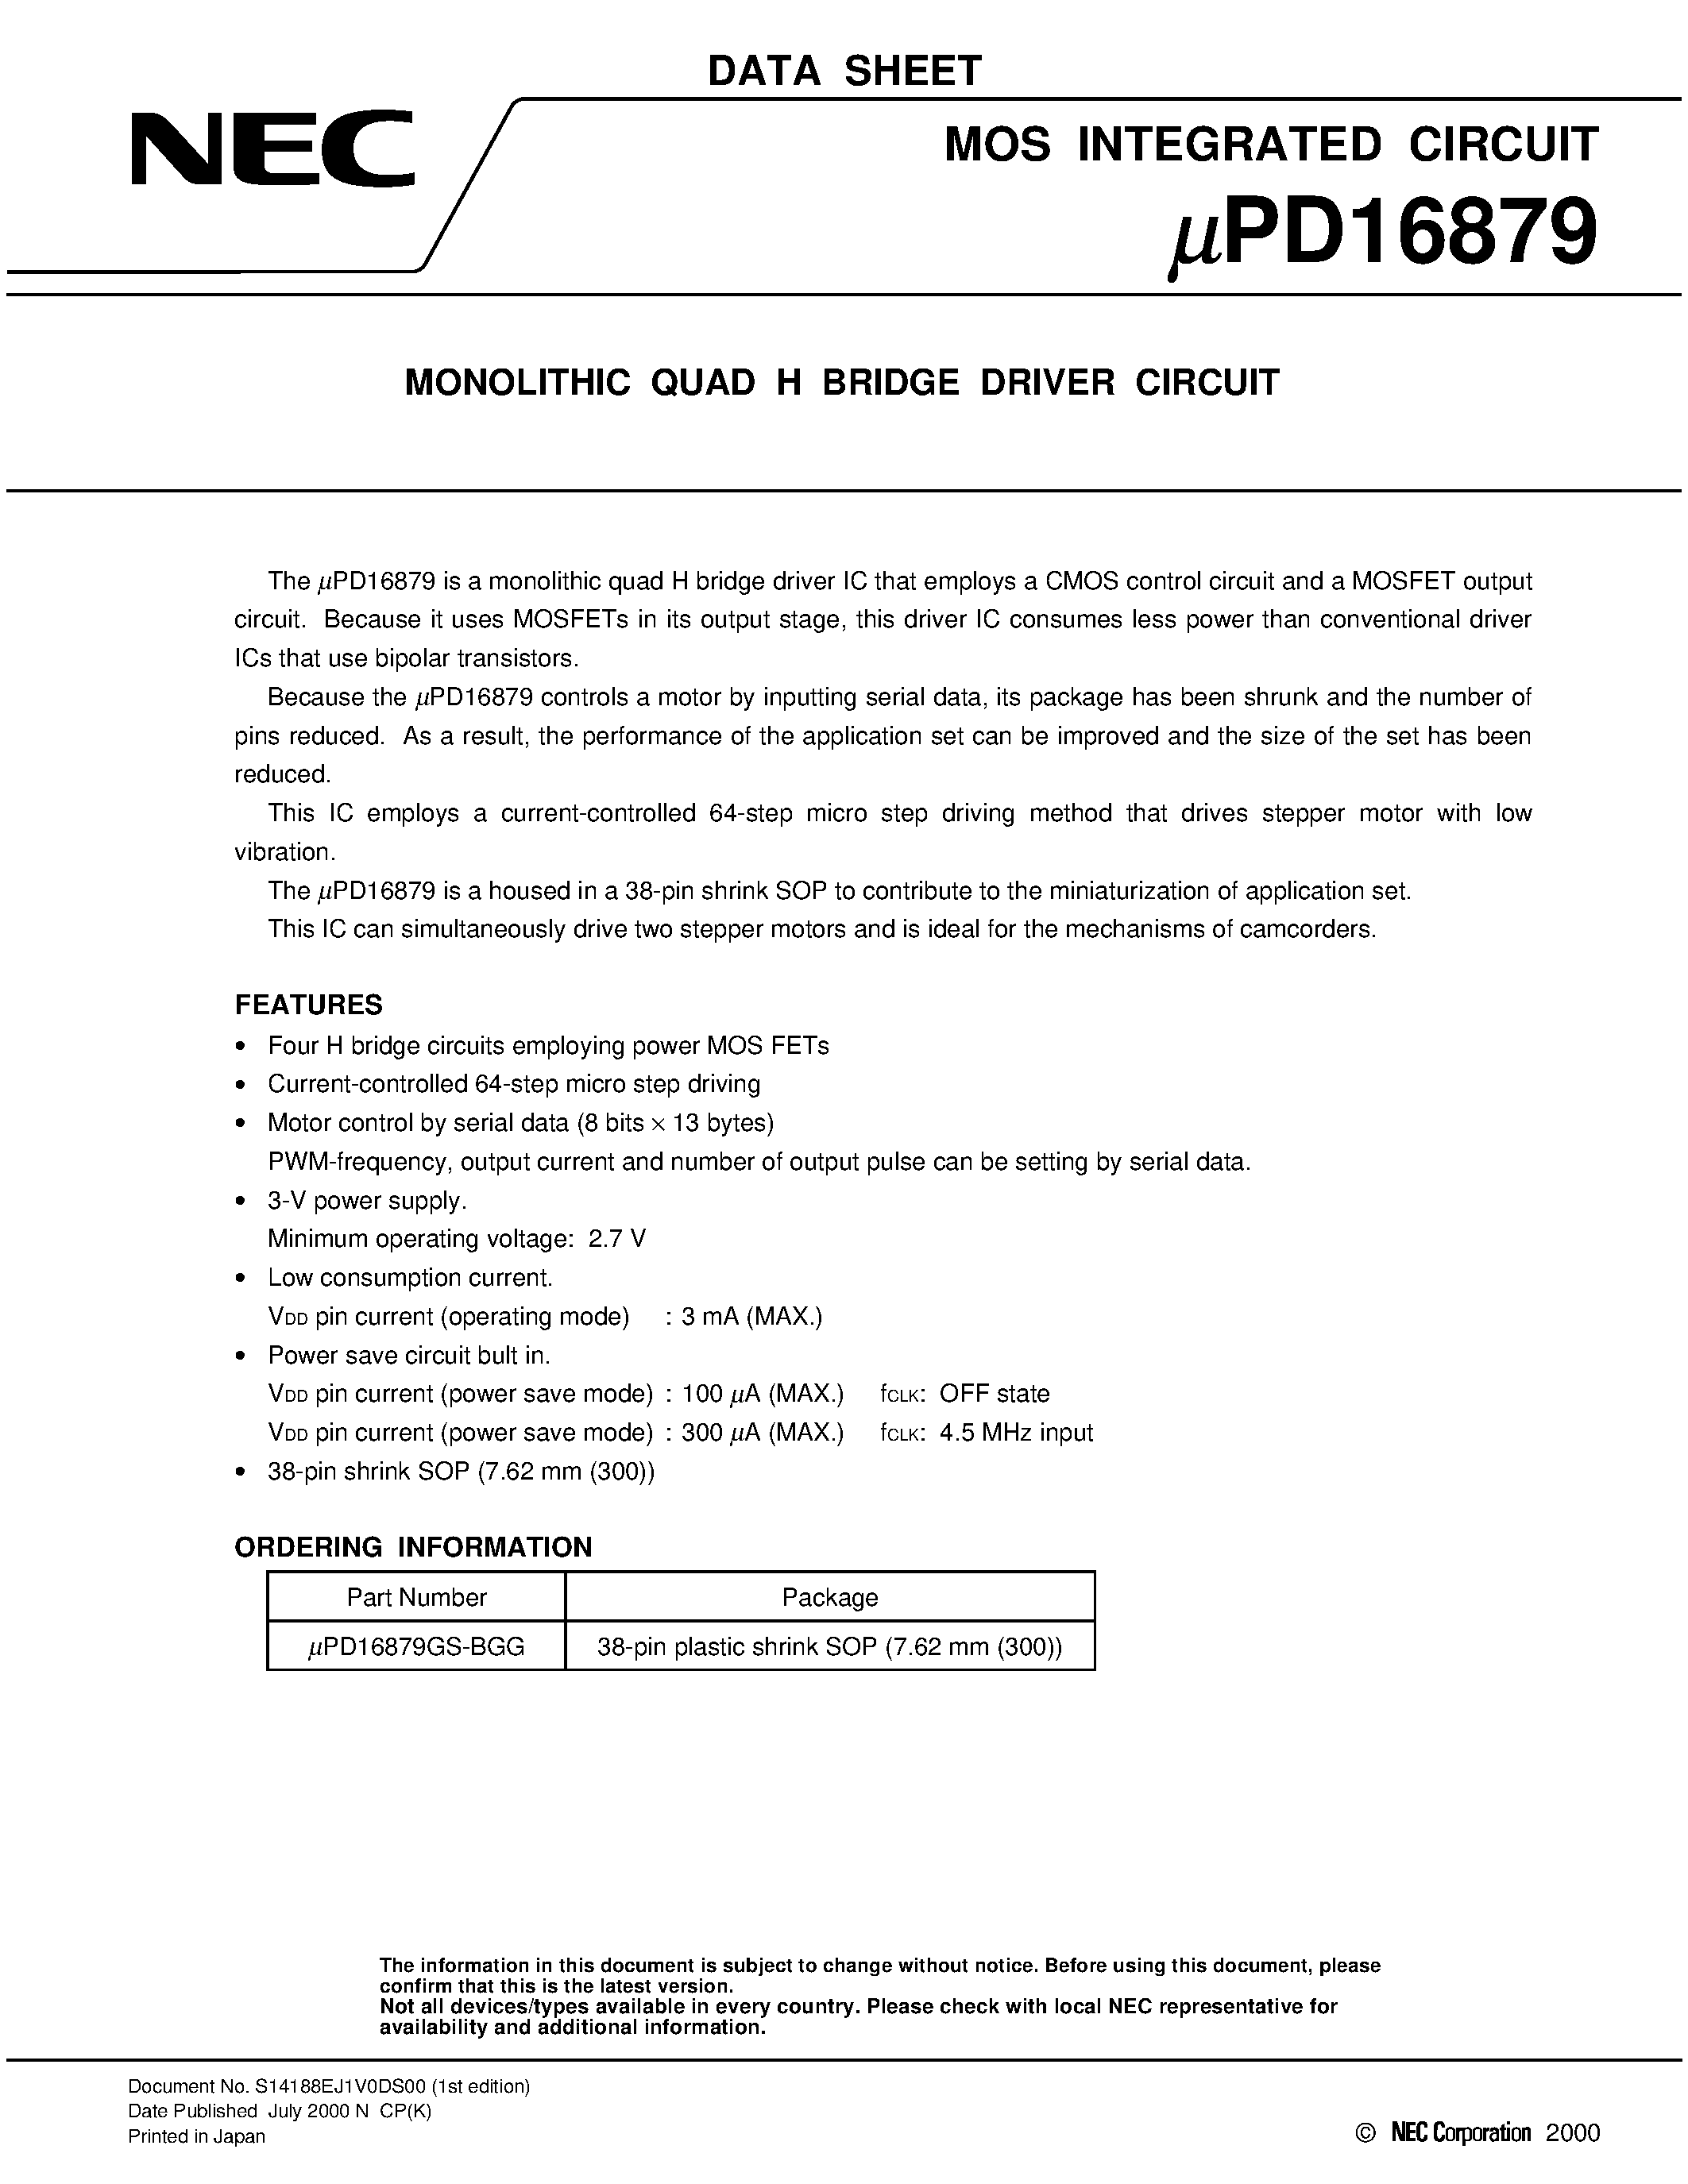 Даташит UPD16879 - MONOLITHIC QUAD H BRIDGE DRIVER CIRCUIT страница 1